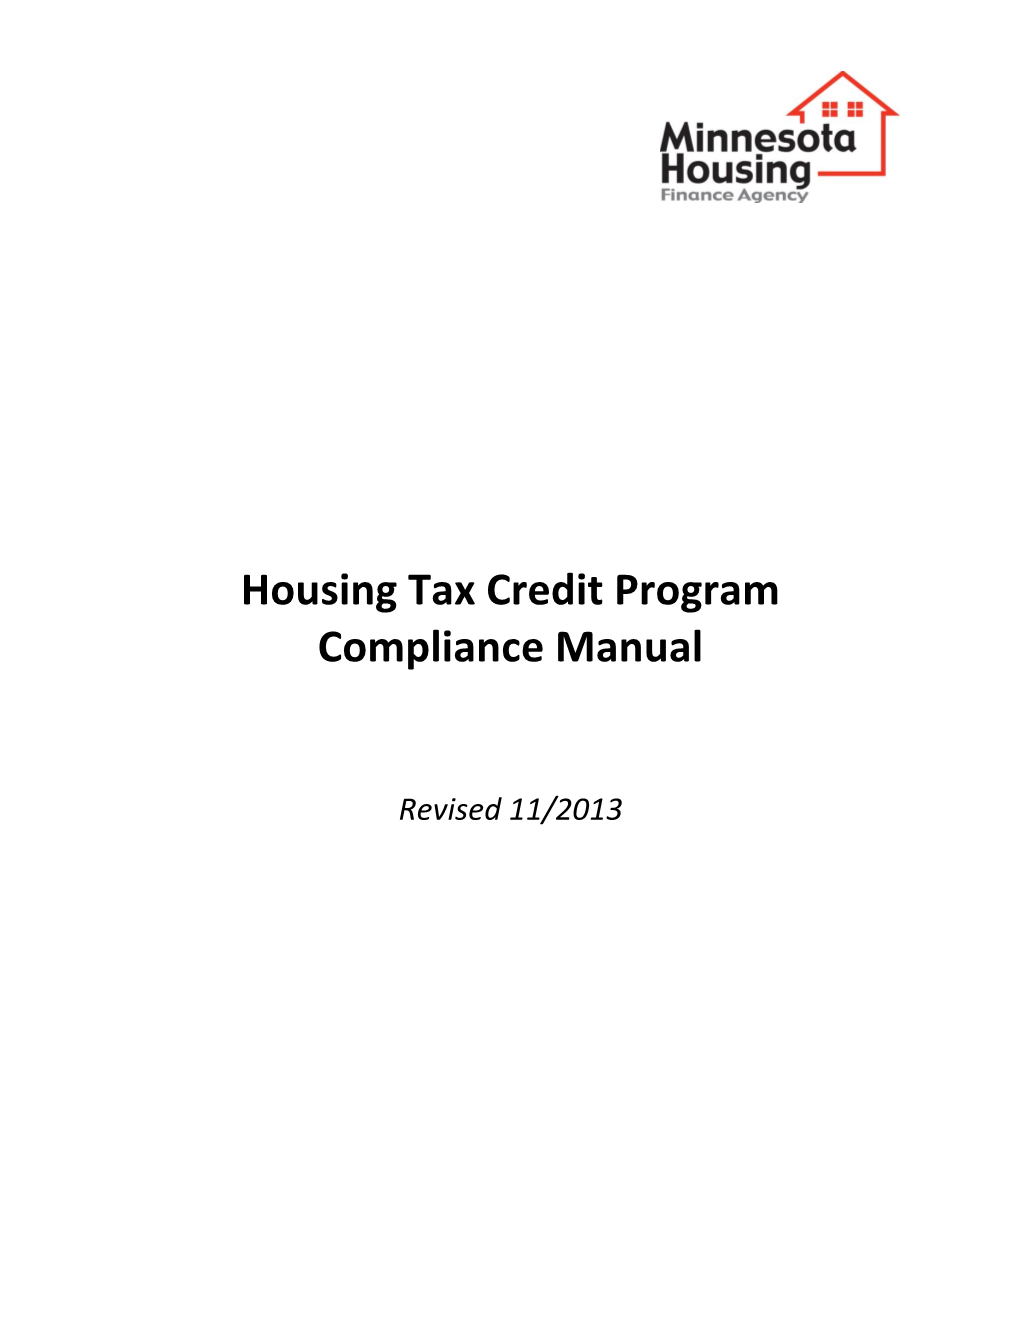 Minnesota Housing Tax Credit Program Compliance Manual